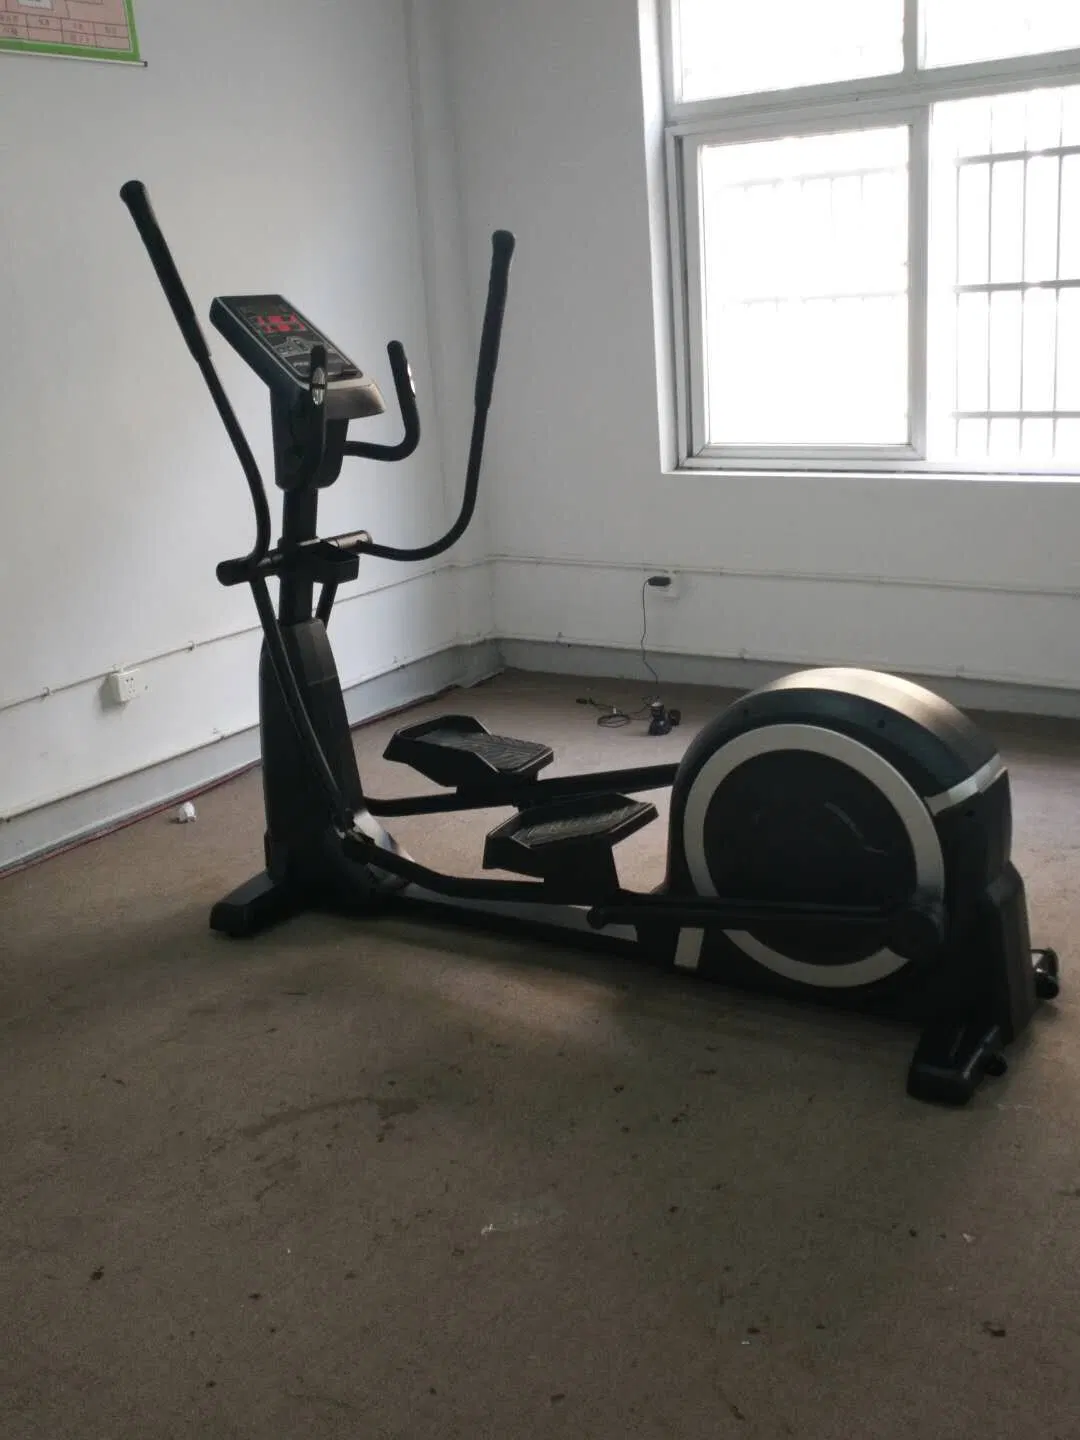 Commercial Elliptical Bike Trainer Cardio Gym Equipment